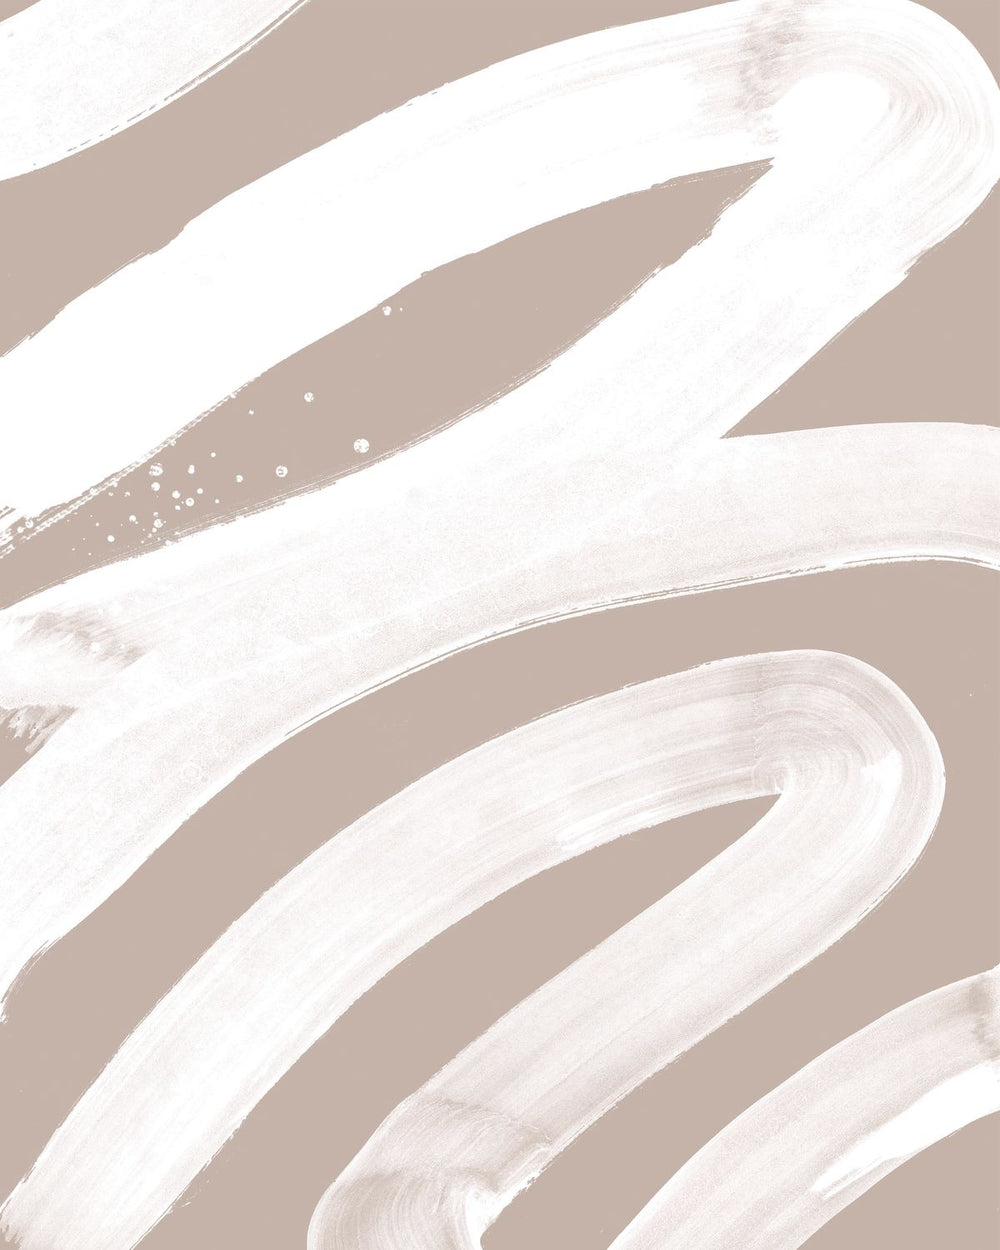 Abstract White Paint Swirls